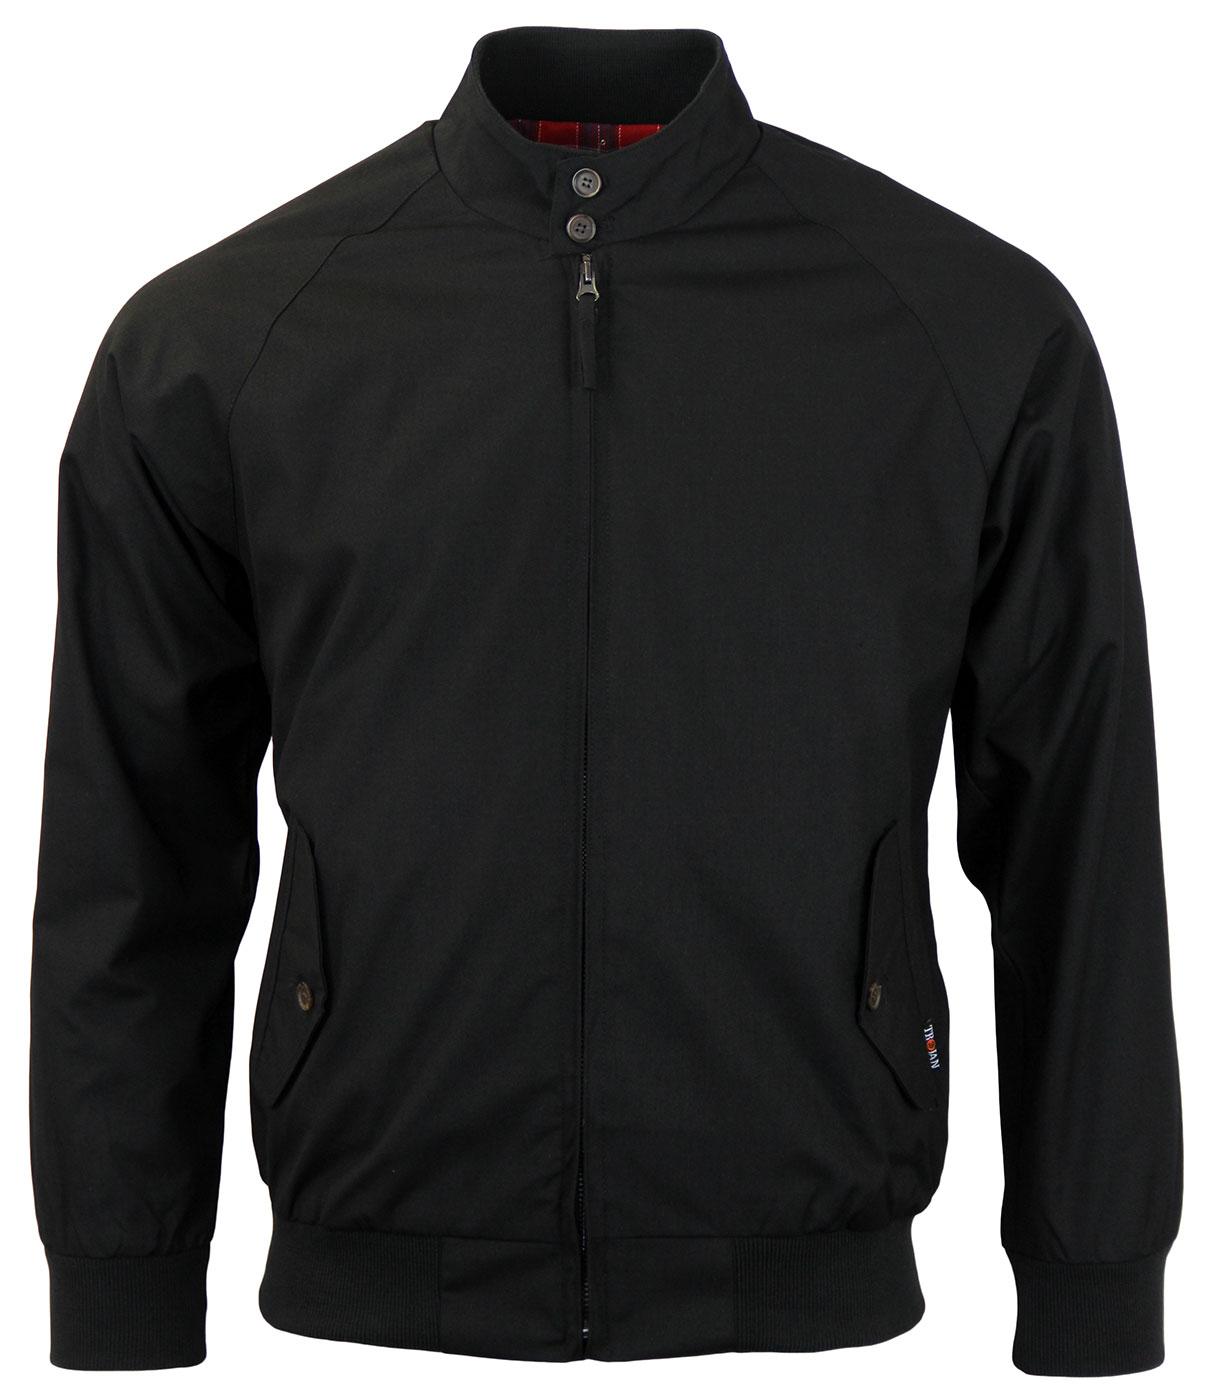 TROJAN Retro Mod Tartan Lined Harrington Jacket in Black